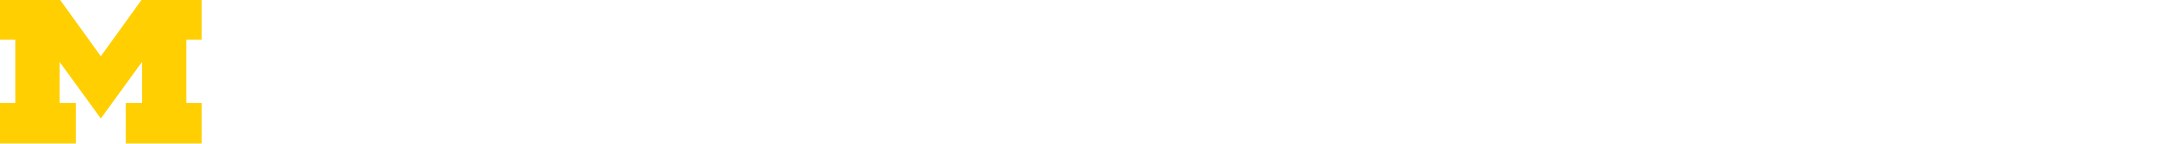 Coulter Translational Research Partnership Program logo